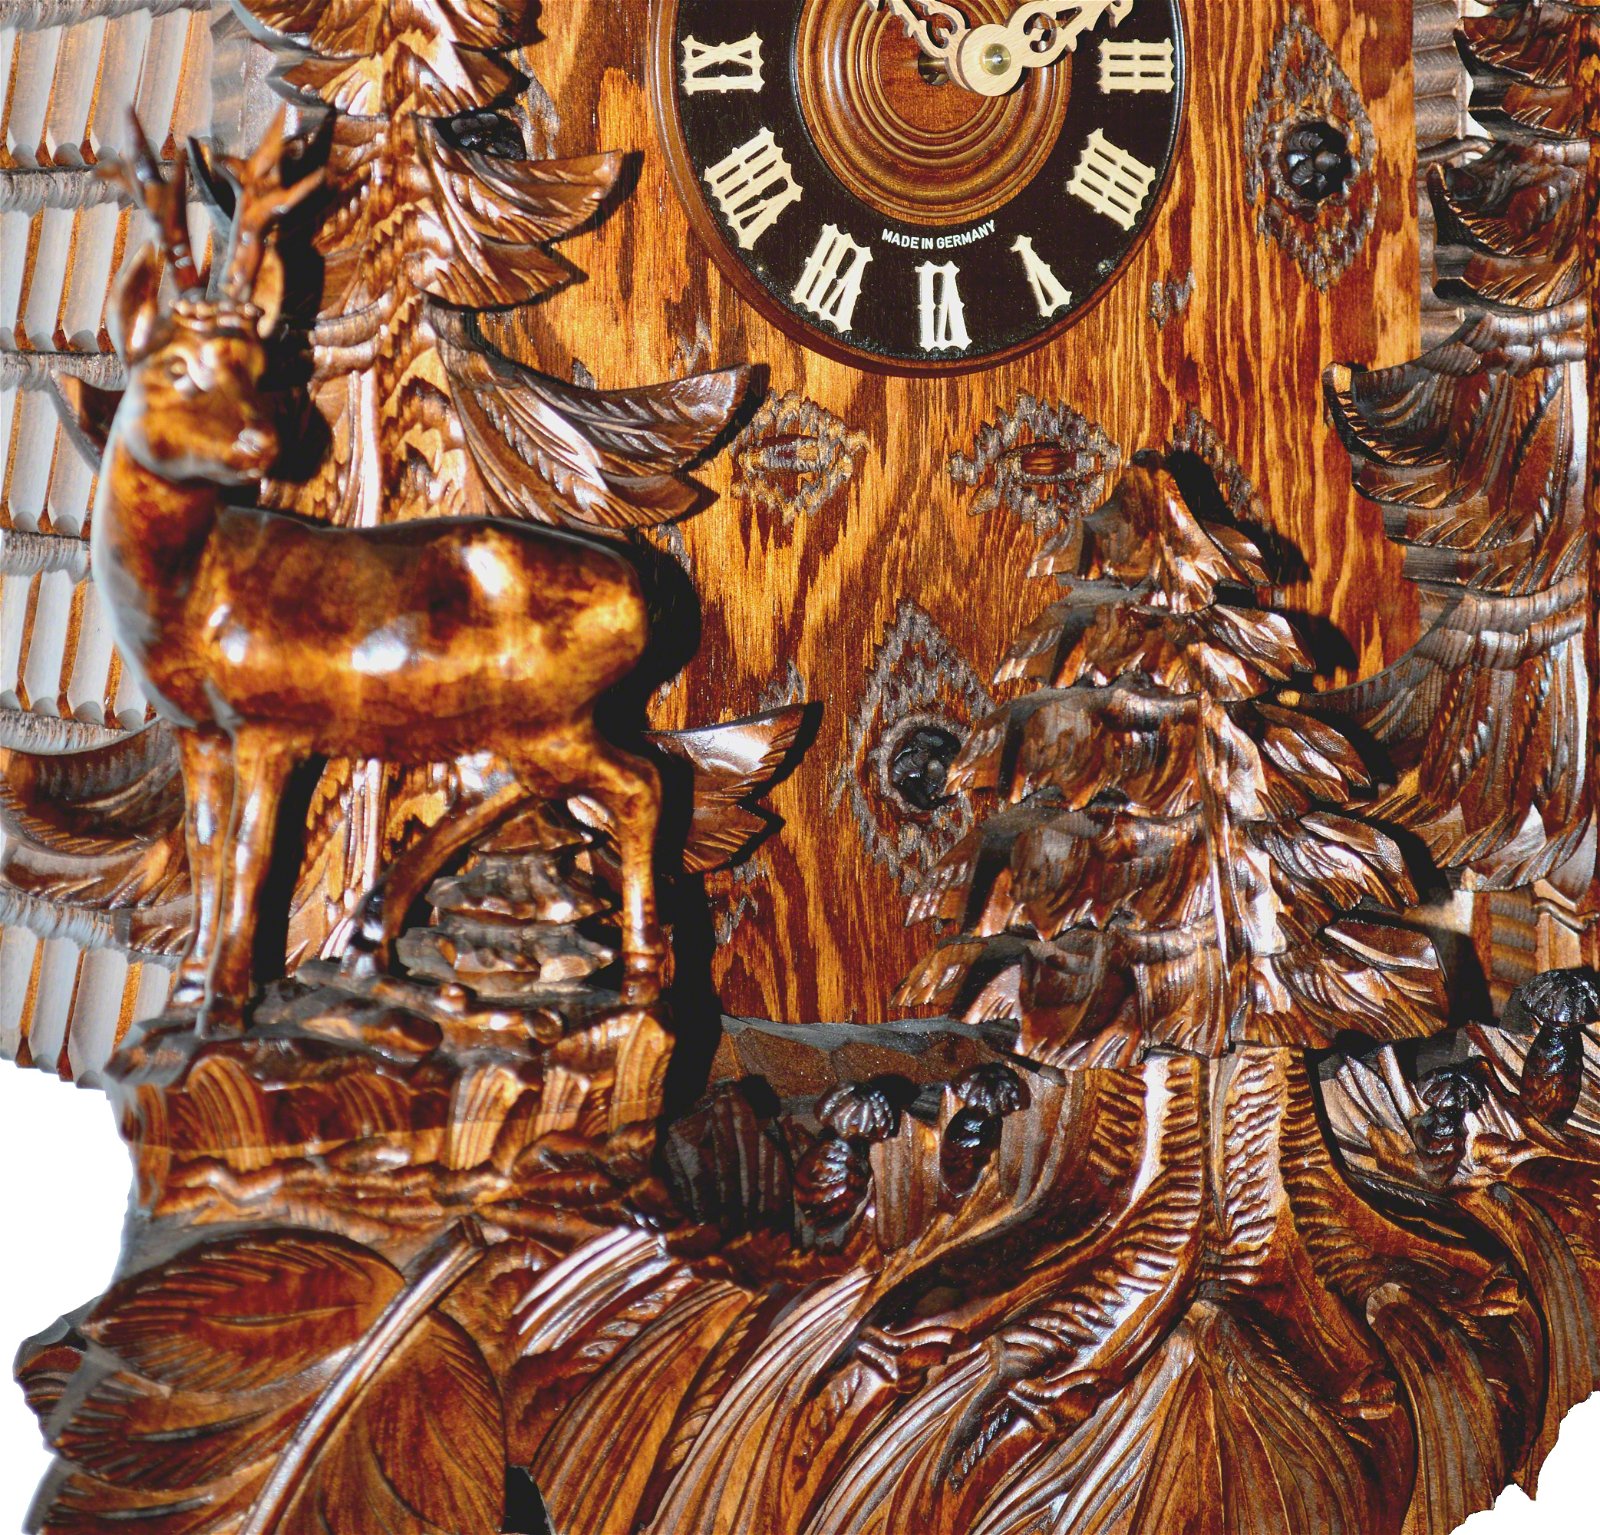 Orologio cucu tradizionale meccanismo settimanale 95cm di August Schwer